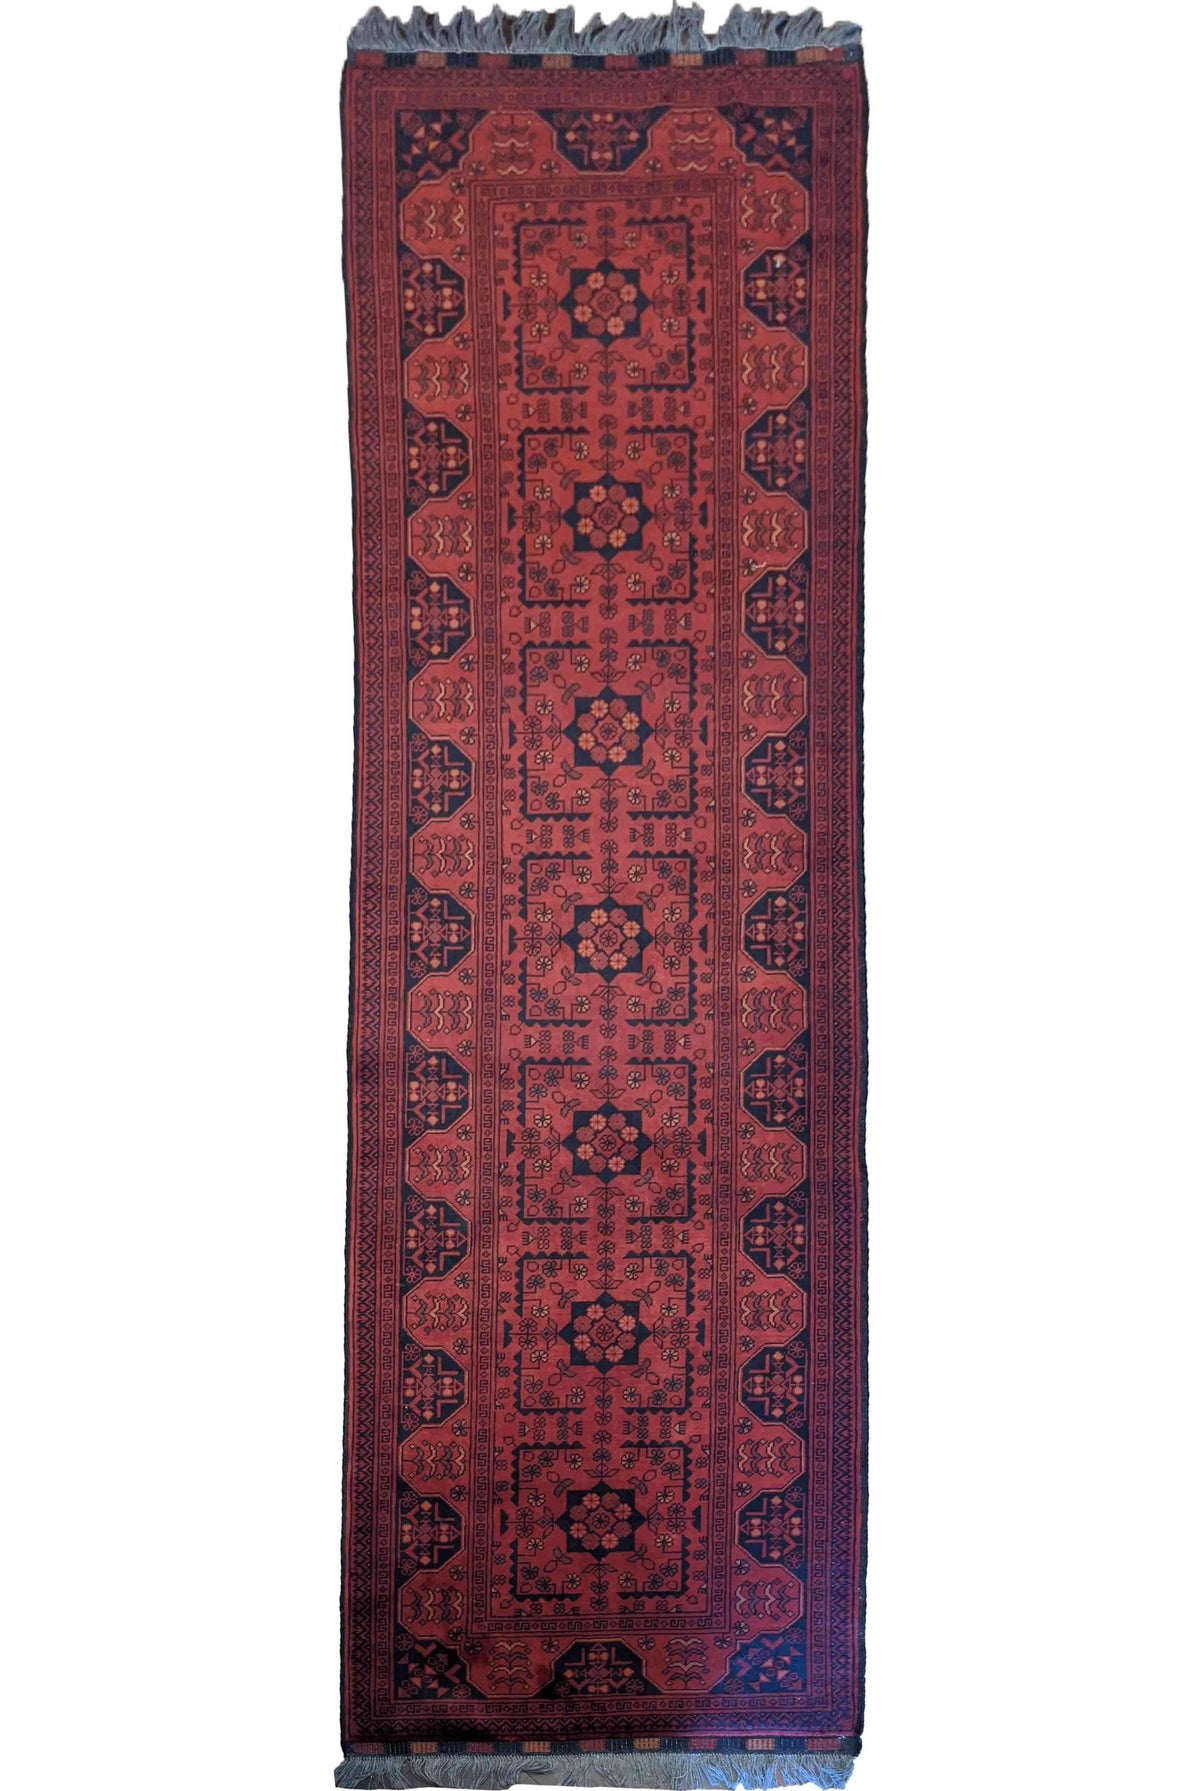 320 x 100 cm Old Karajeh Red Rug